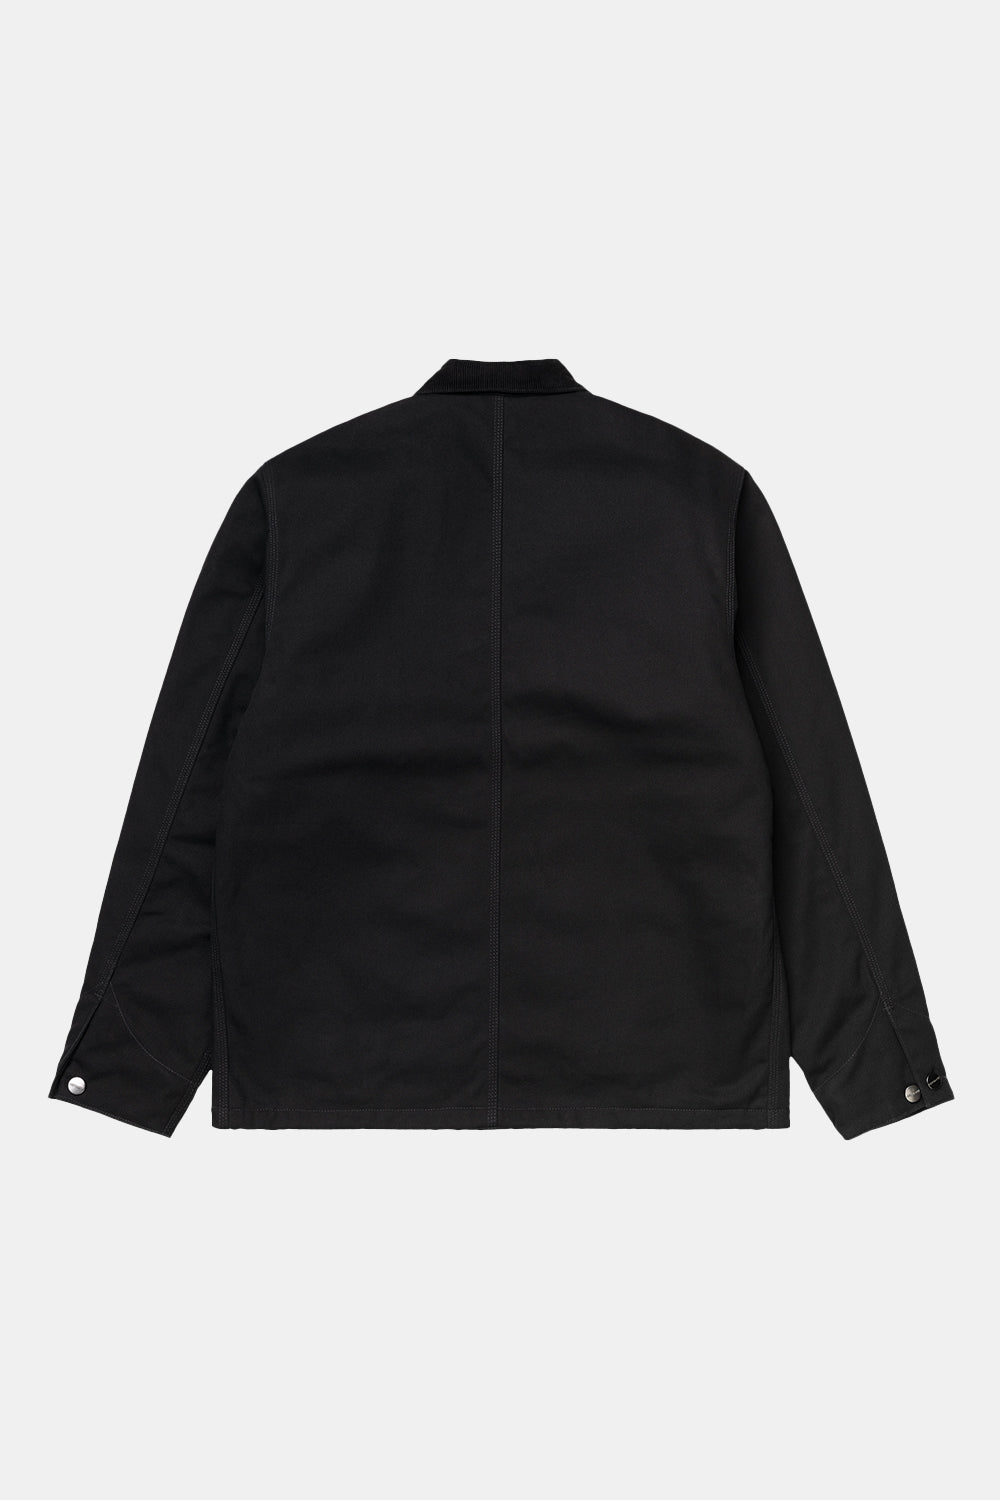 Carhartt Michigan Chore Jacket (Black/Black Rigid) | Number Six